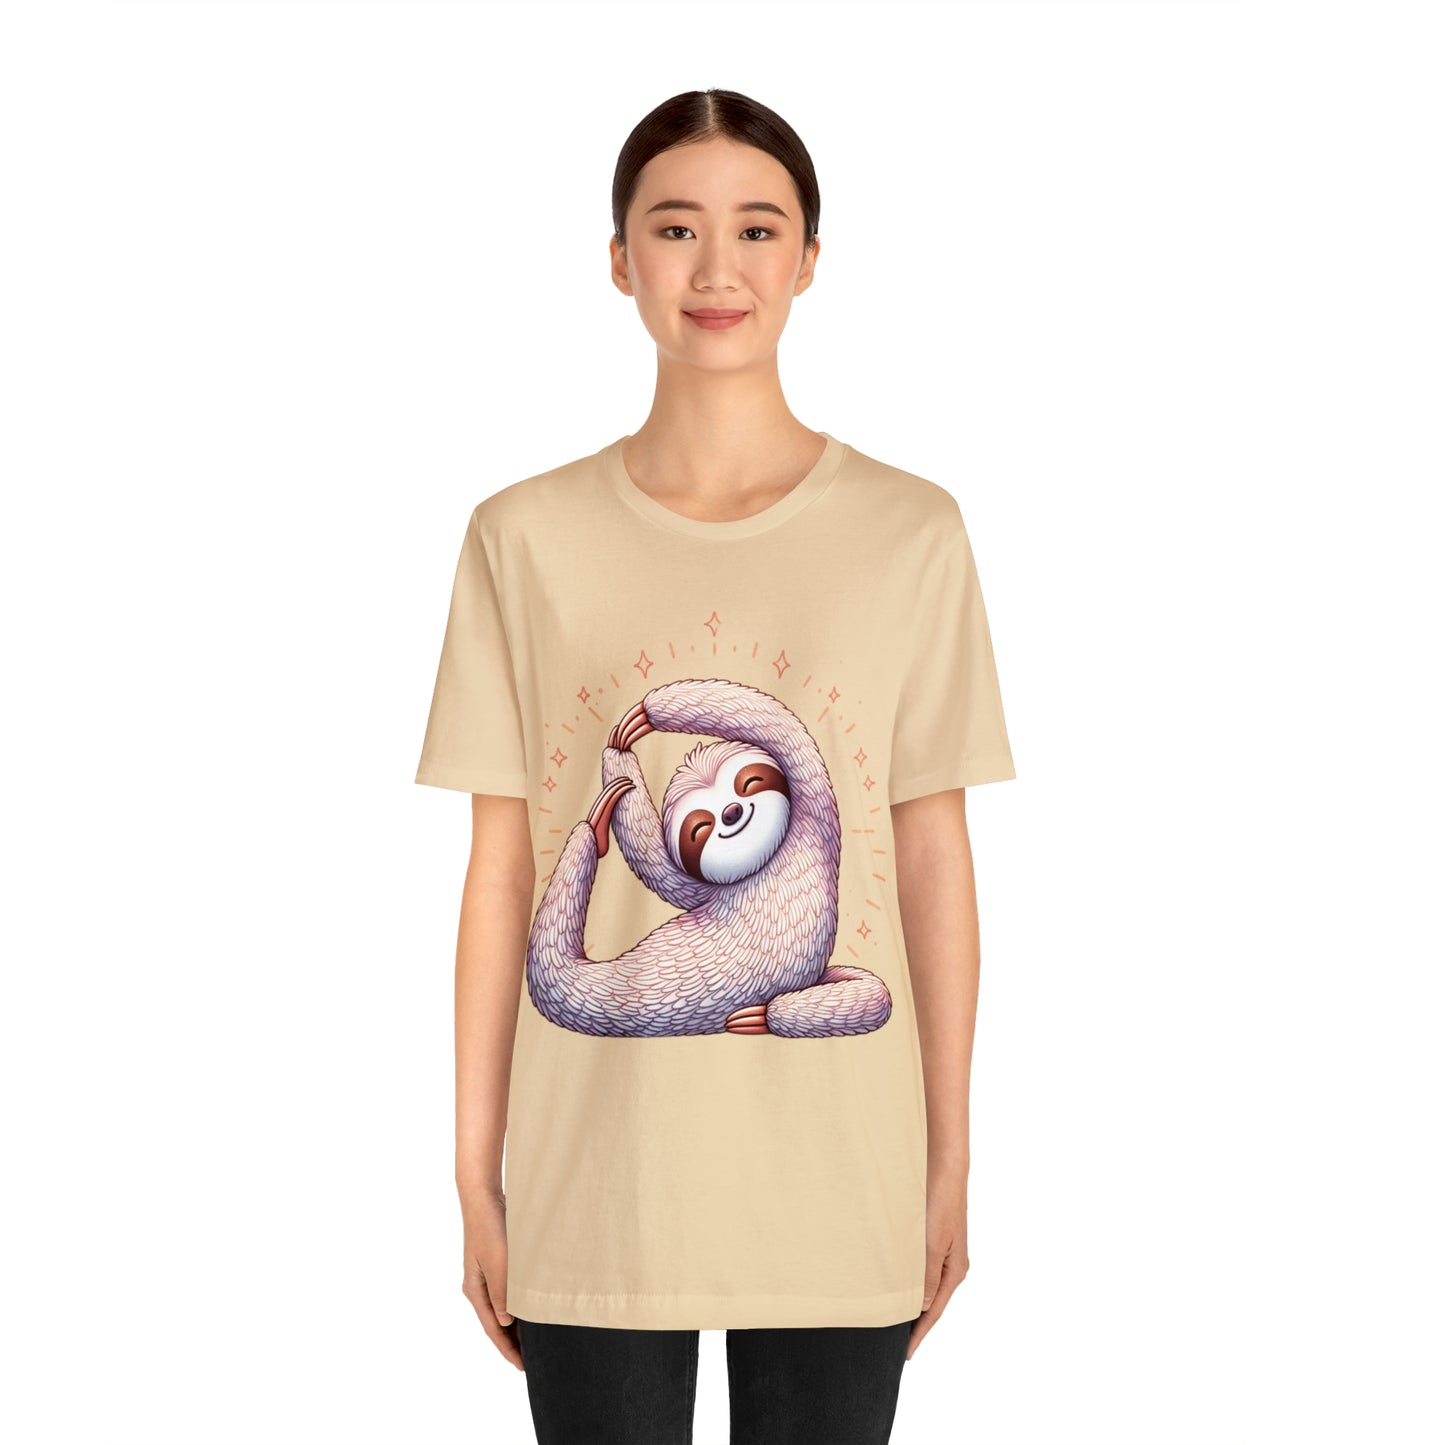 Sloth Yoga T-Shirt, Funny T-Shirt, Sloth Gifts, Cuteness Overload, Apparel